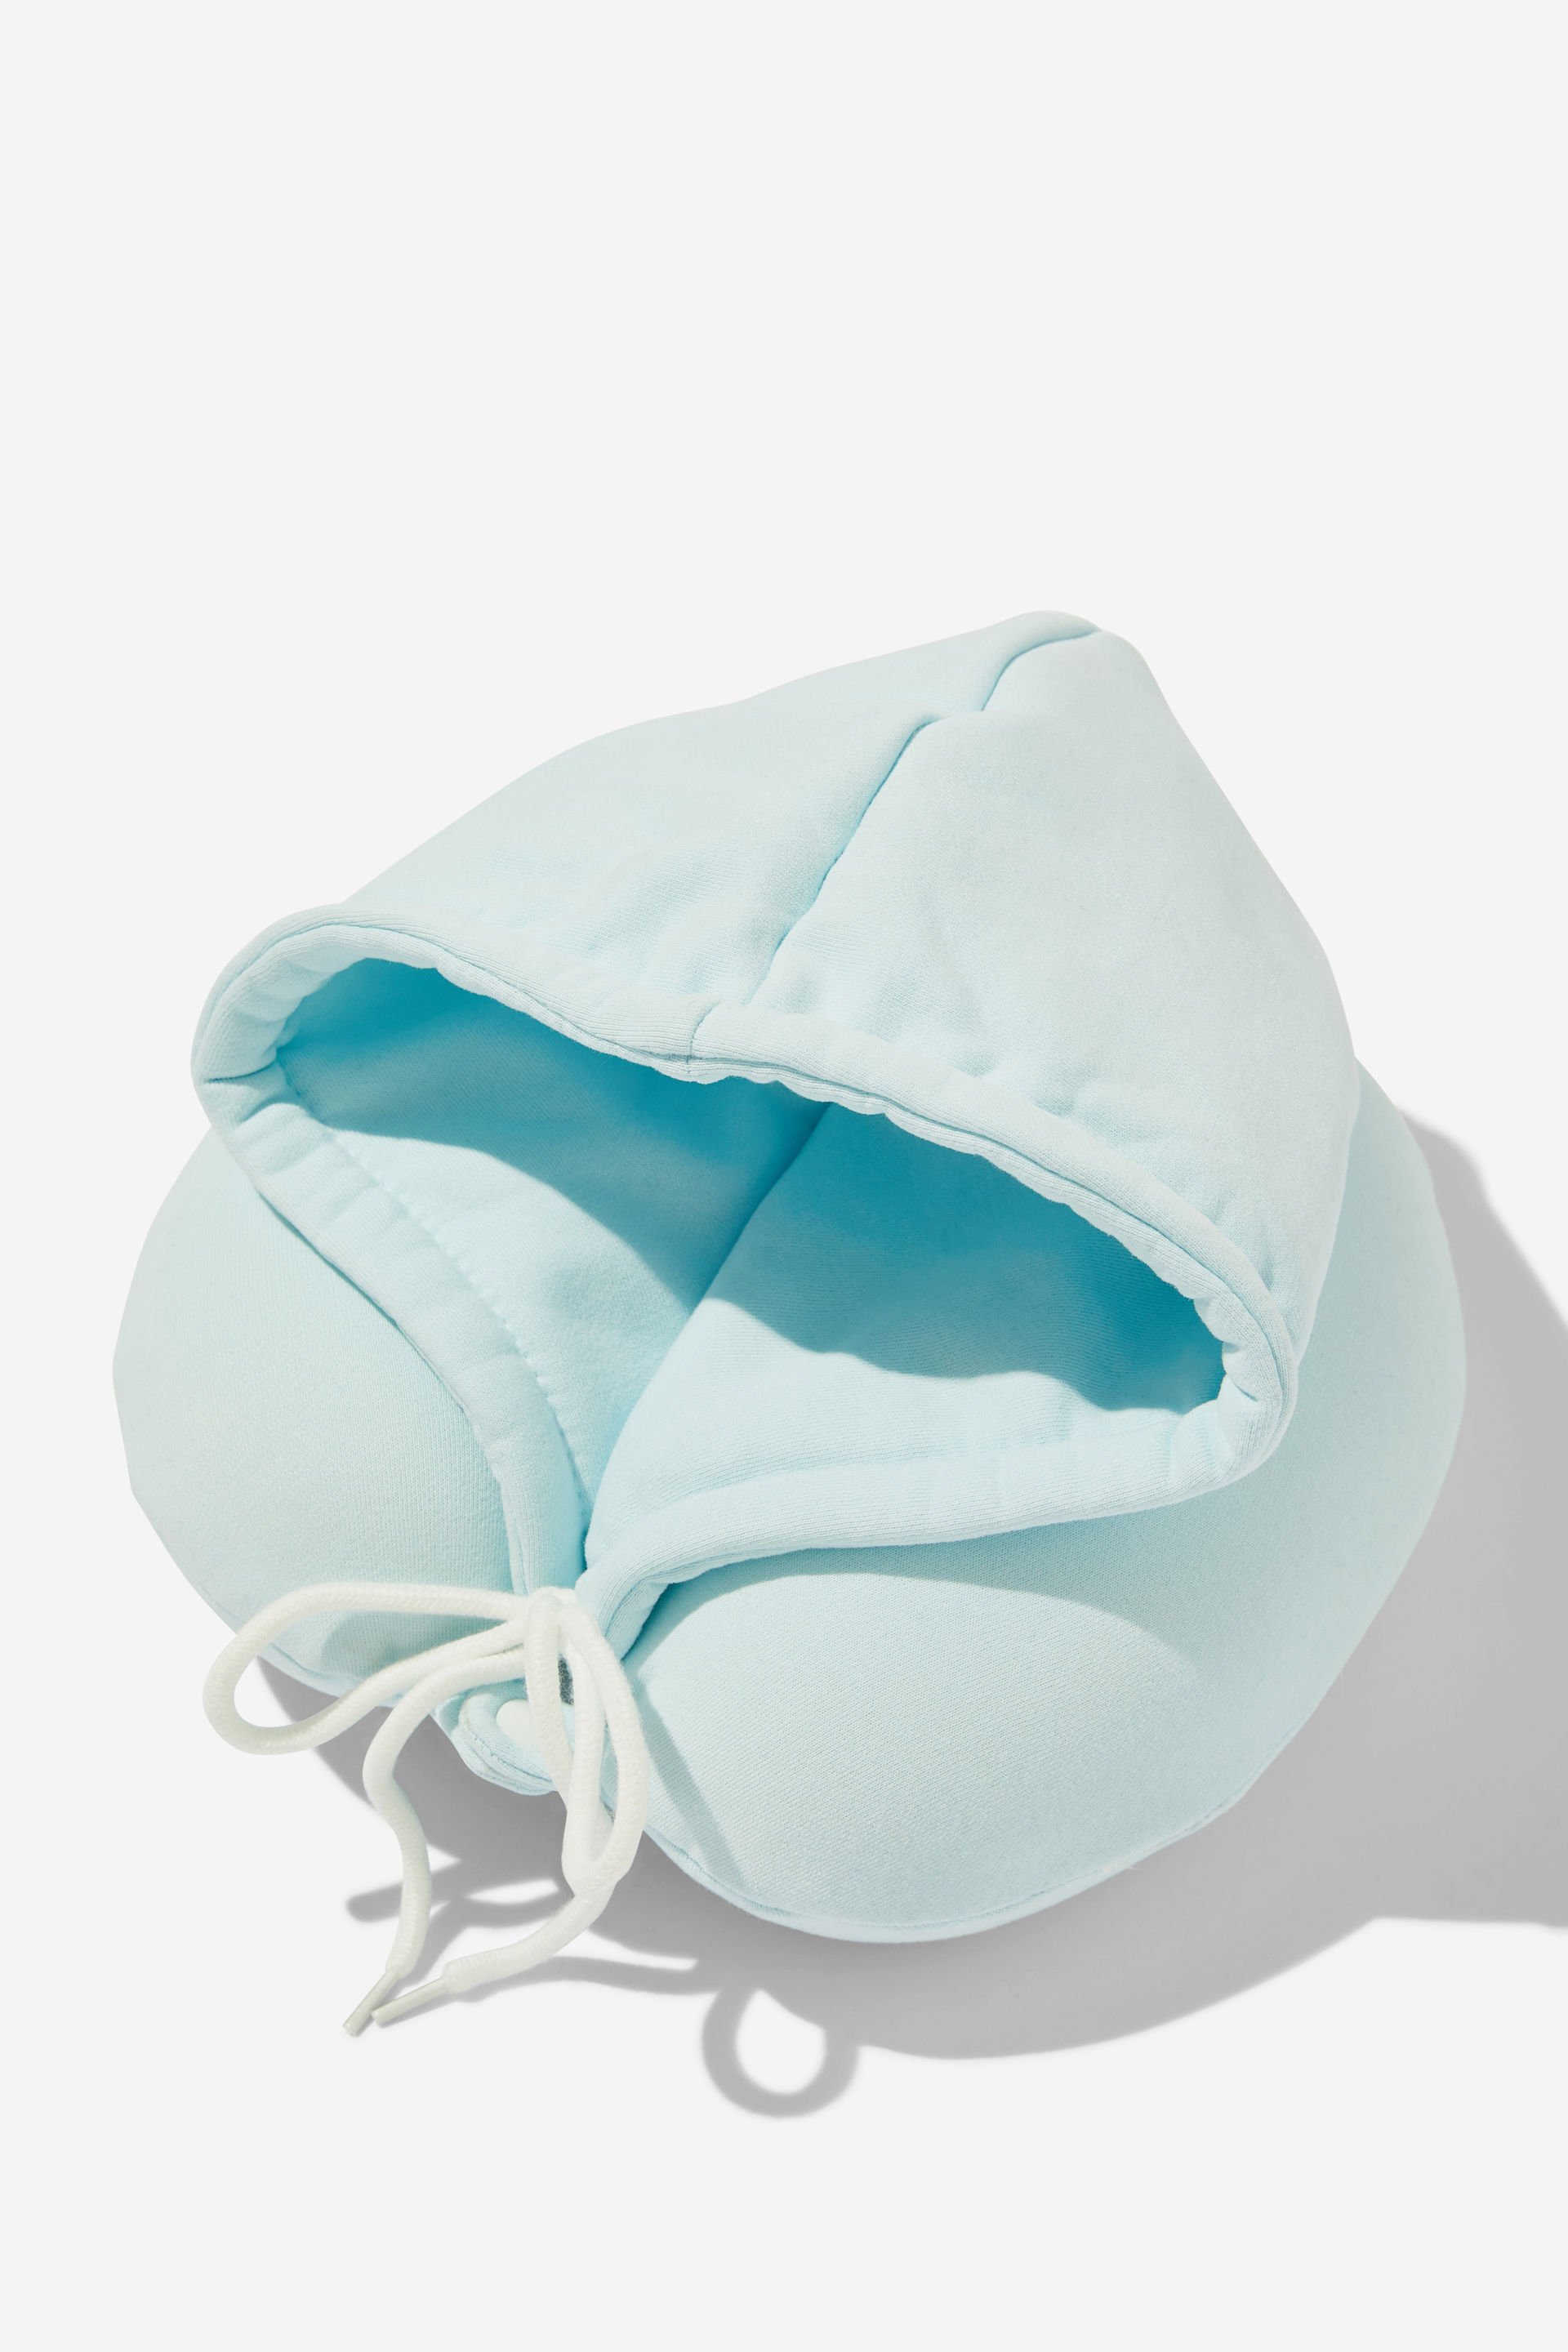 Typo - Travel Hoodie Neck Pillow - Arctic blue